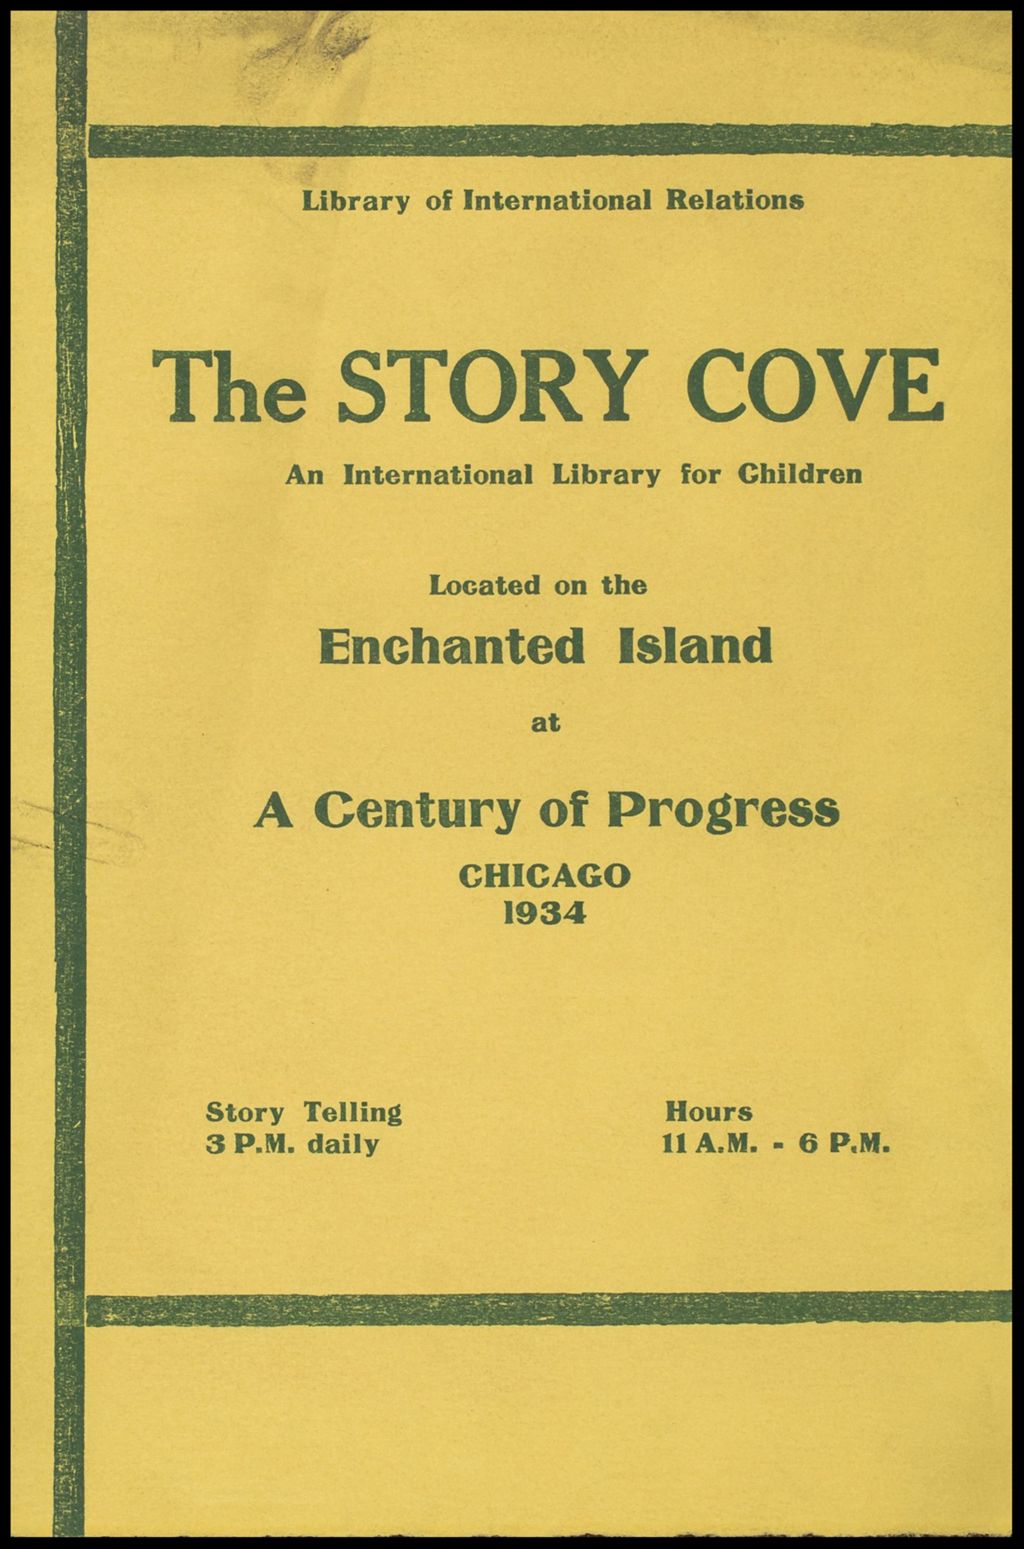 The Story Cove: an international library for children (Folder 16-249)